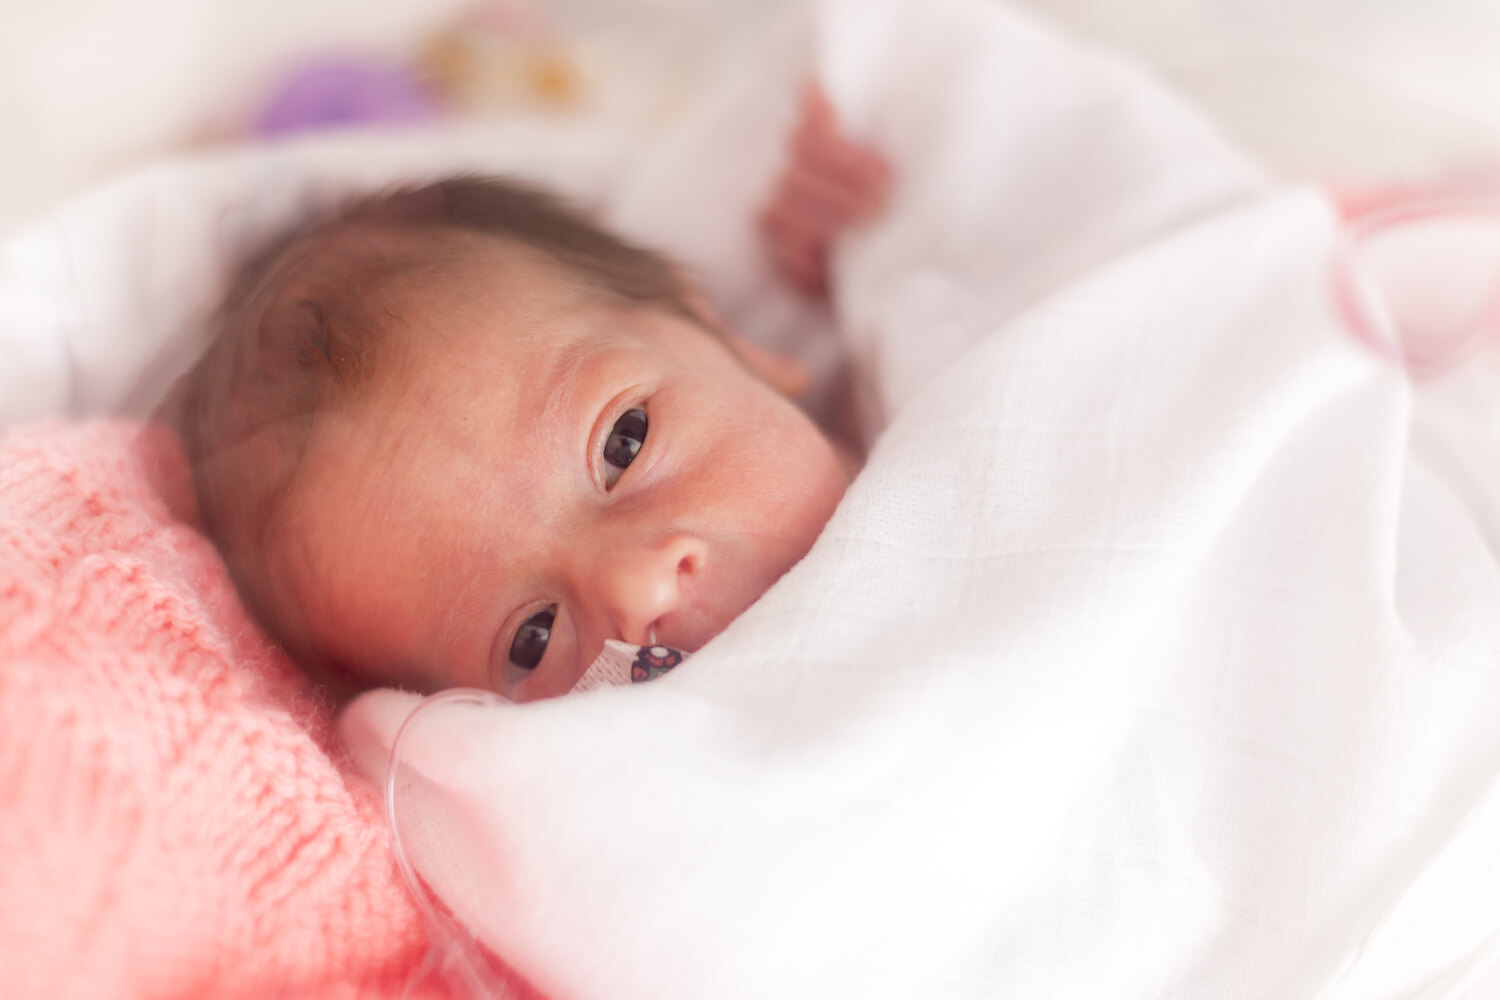 Bilirubin in premature babies